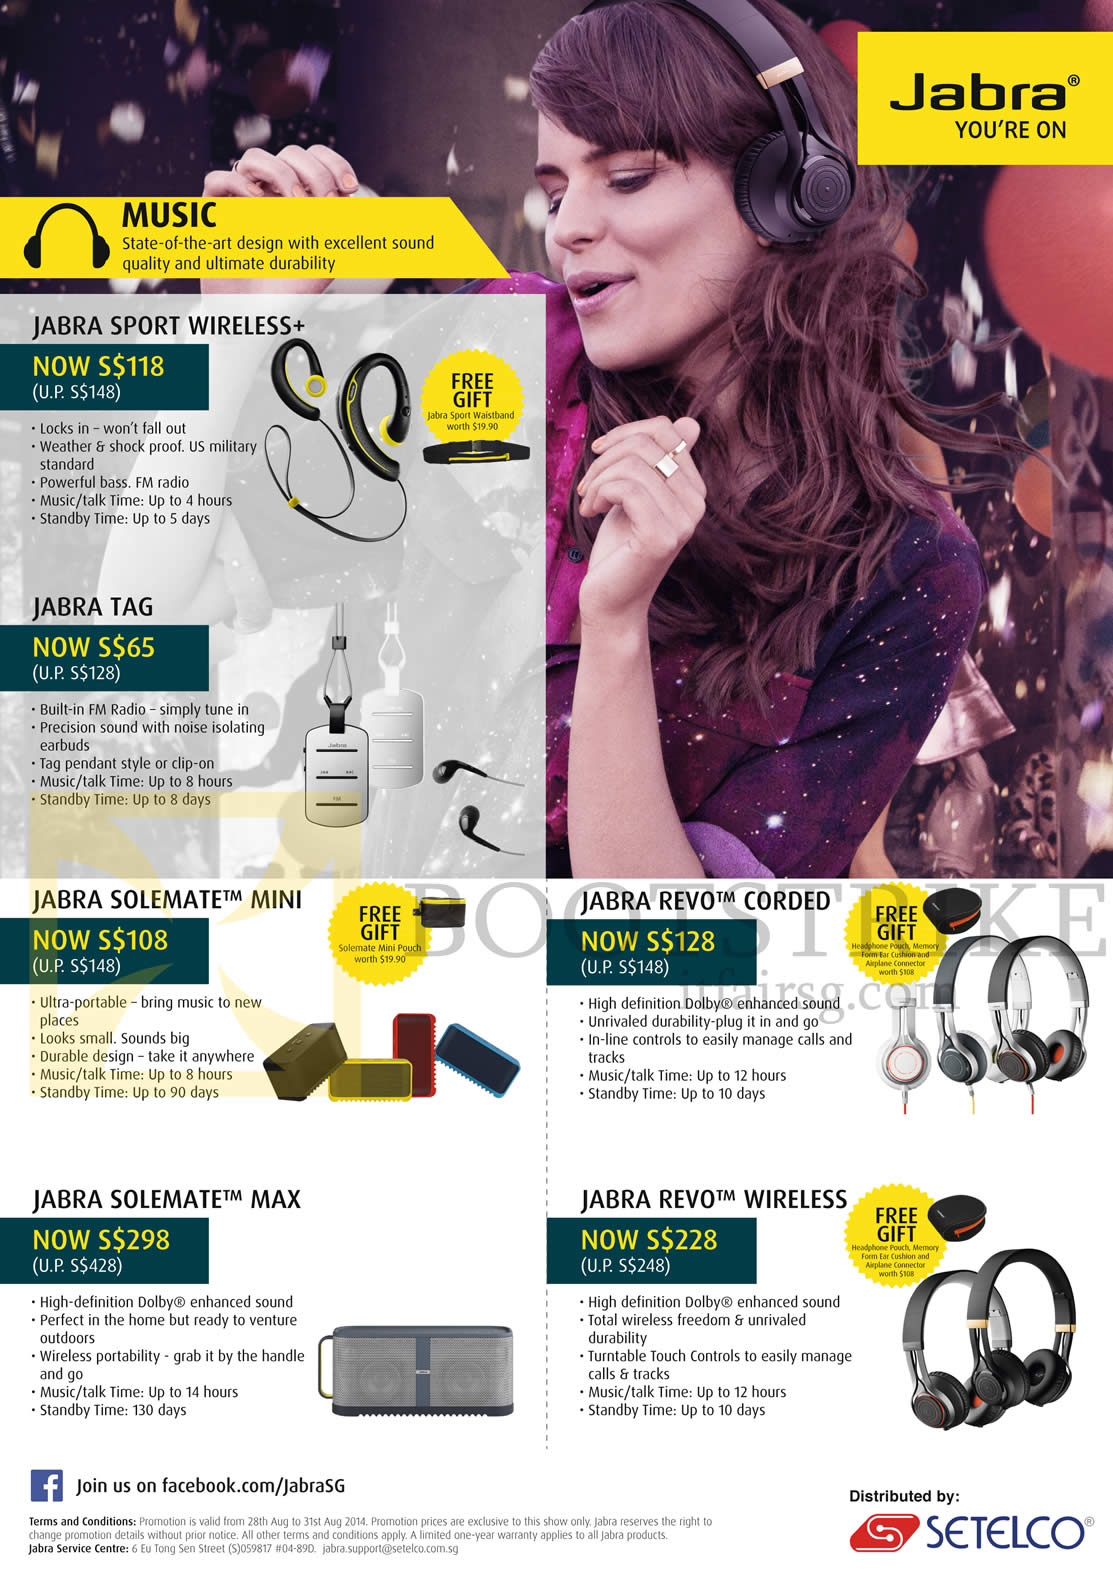 COMEX 2014 price list image brochure of Jabra Headphone, Earphone, Speakers, Sport Wireless, Tag, Solemate Mini, Max, Revo Corder, Wireless